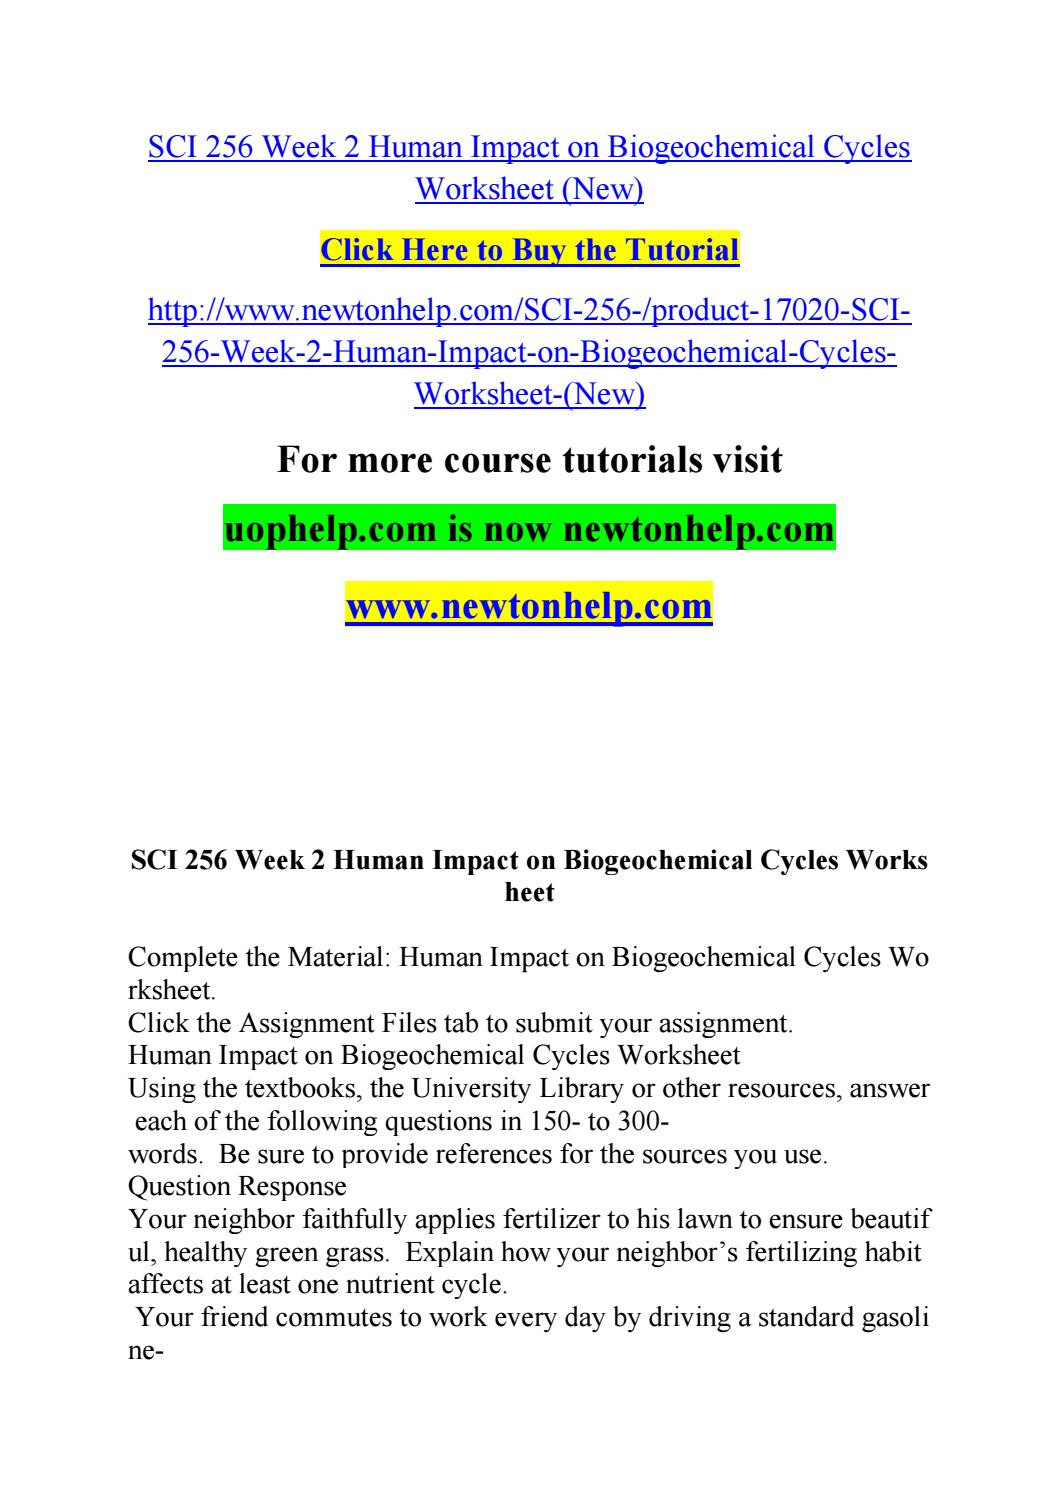 Biogeochemical Cycles Worksheet Answers Sci 256 Week 2 Human Impact On Biogeochemical Cycles